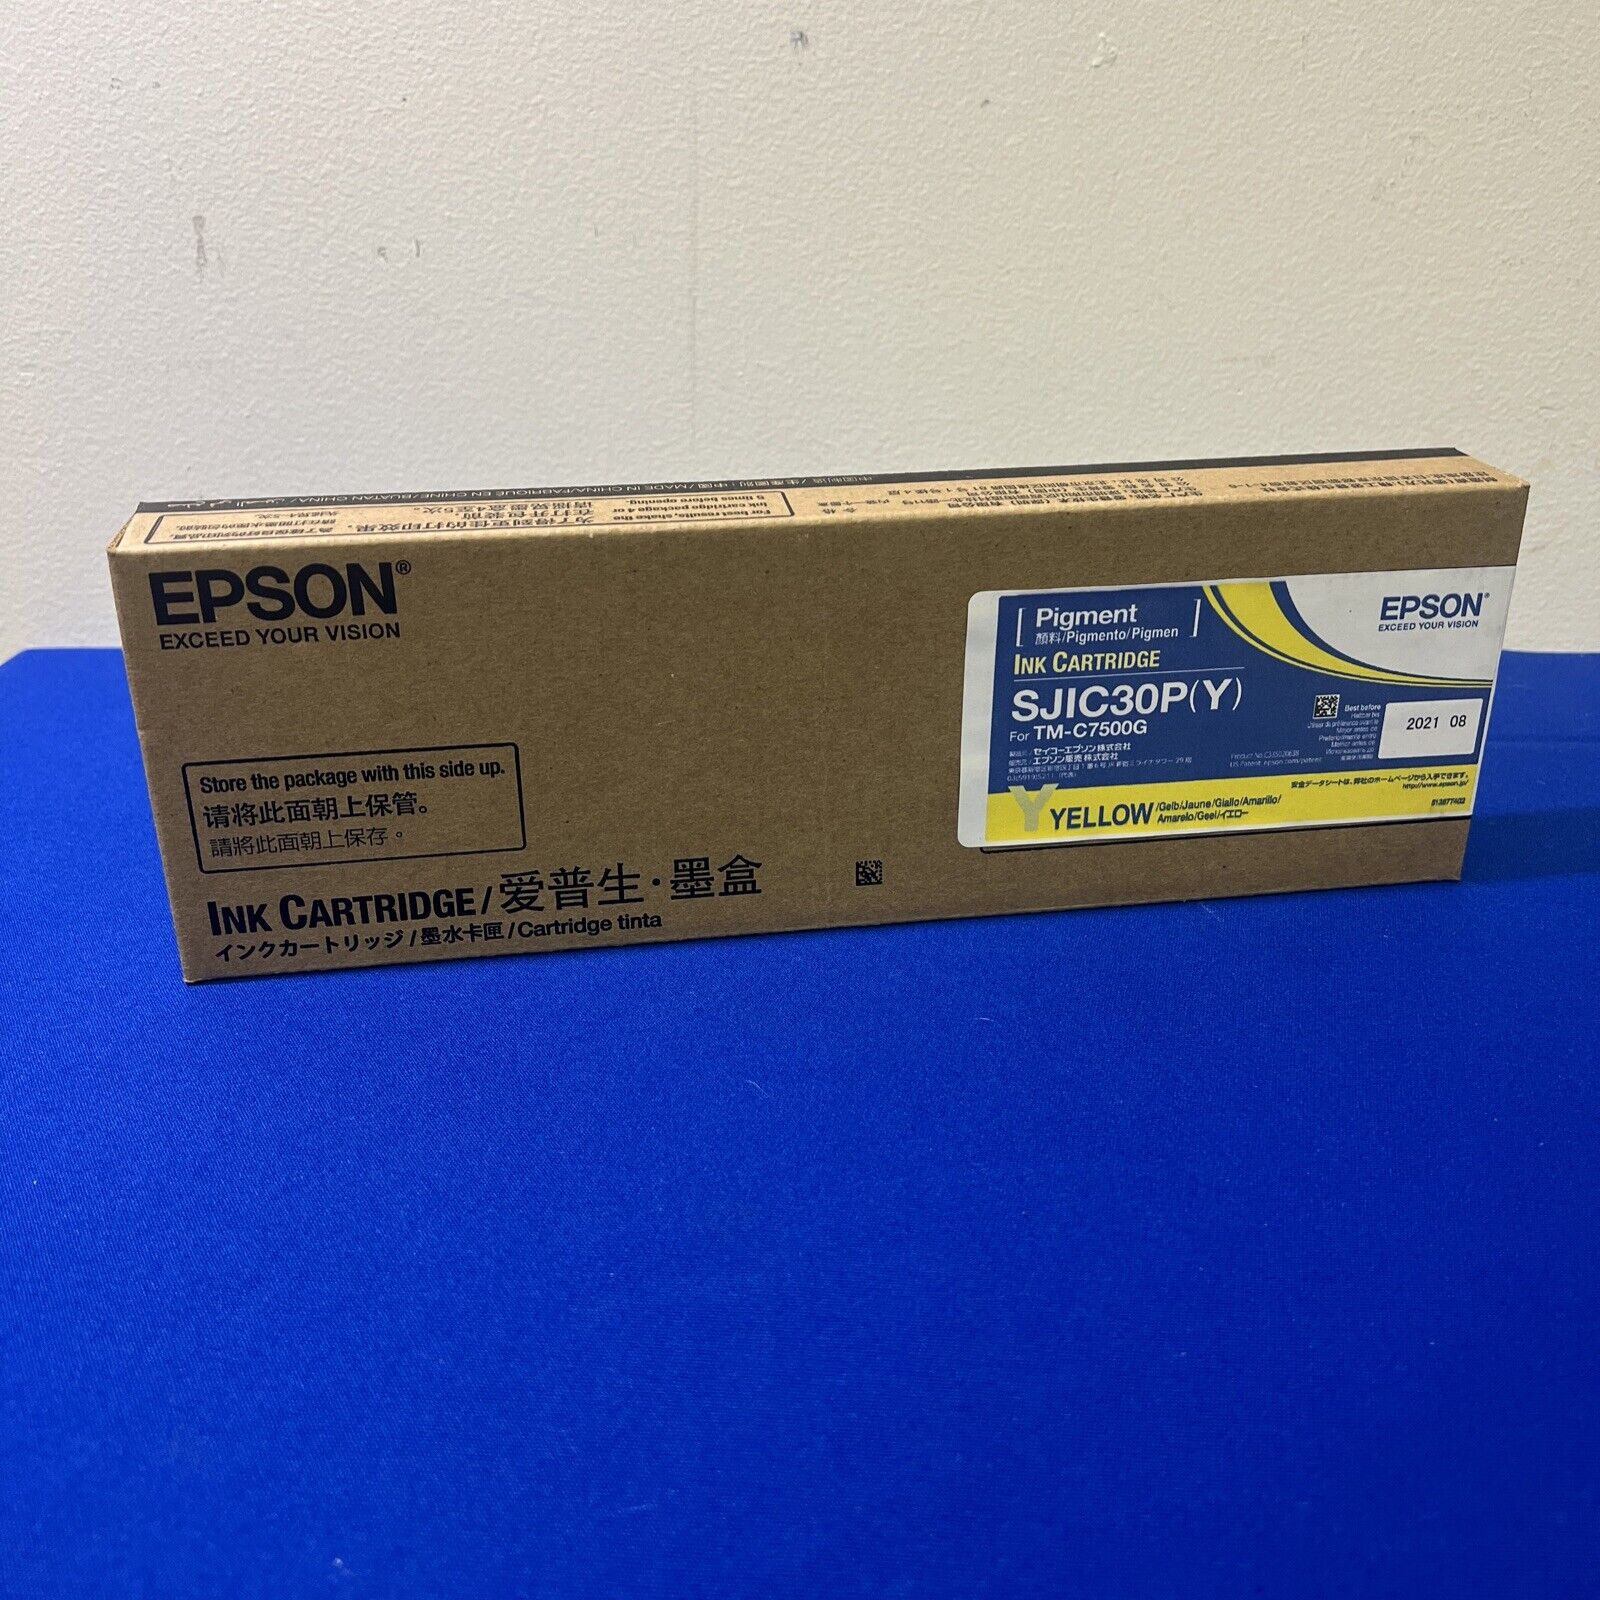 Epson SJIC30P (Y) Yellow Ink Cartridge For Epson TM-C7500G New Unopened